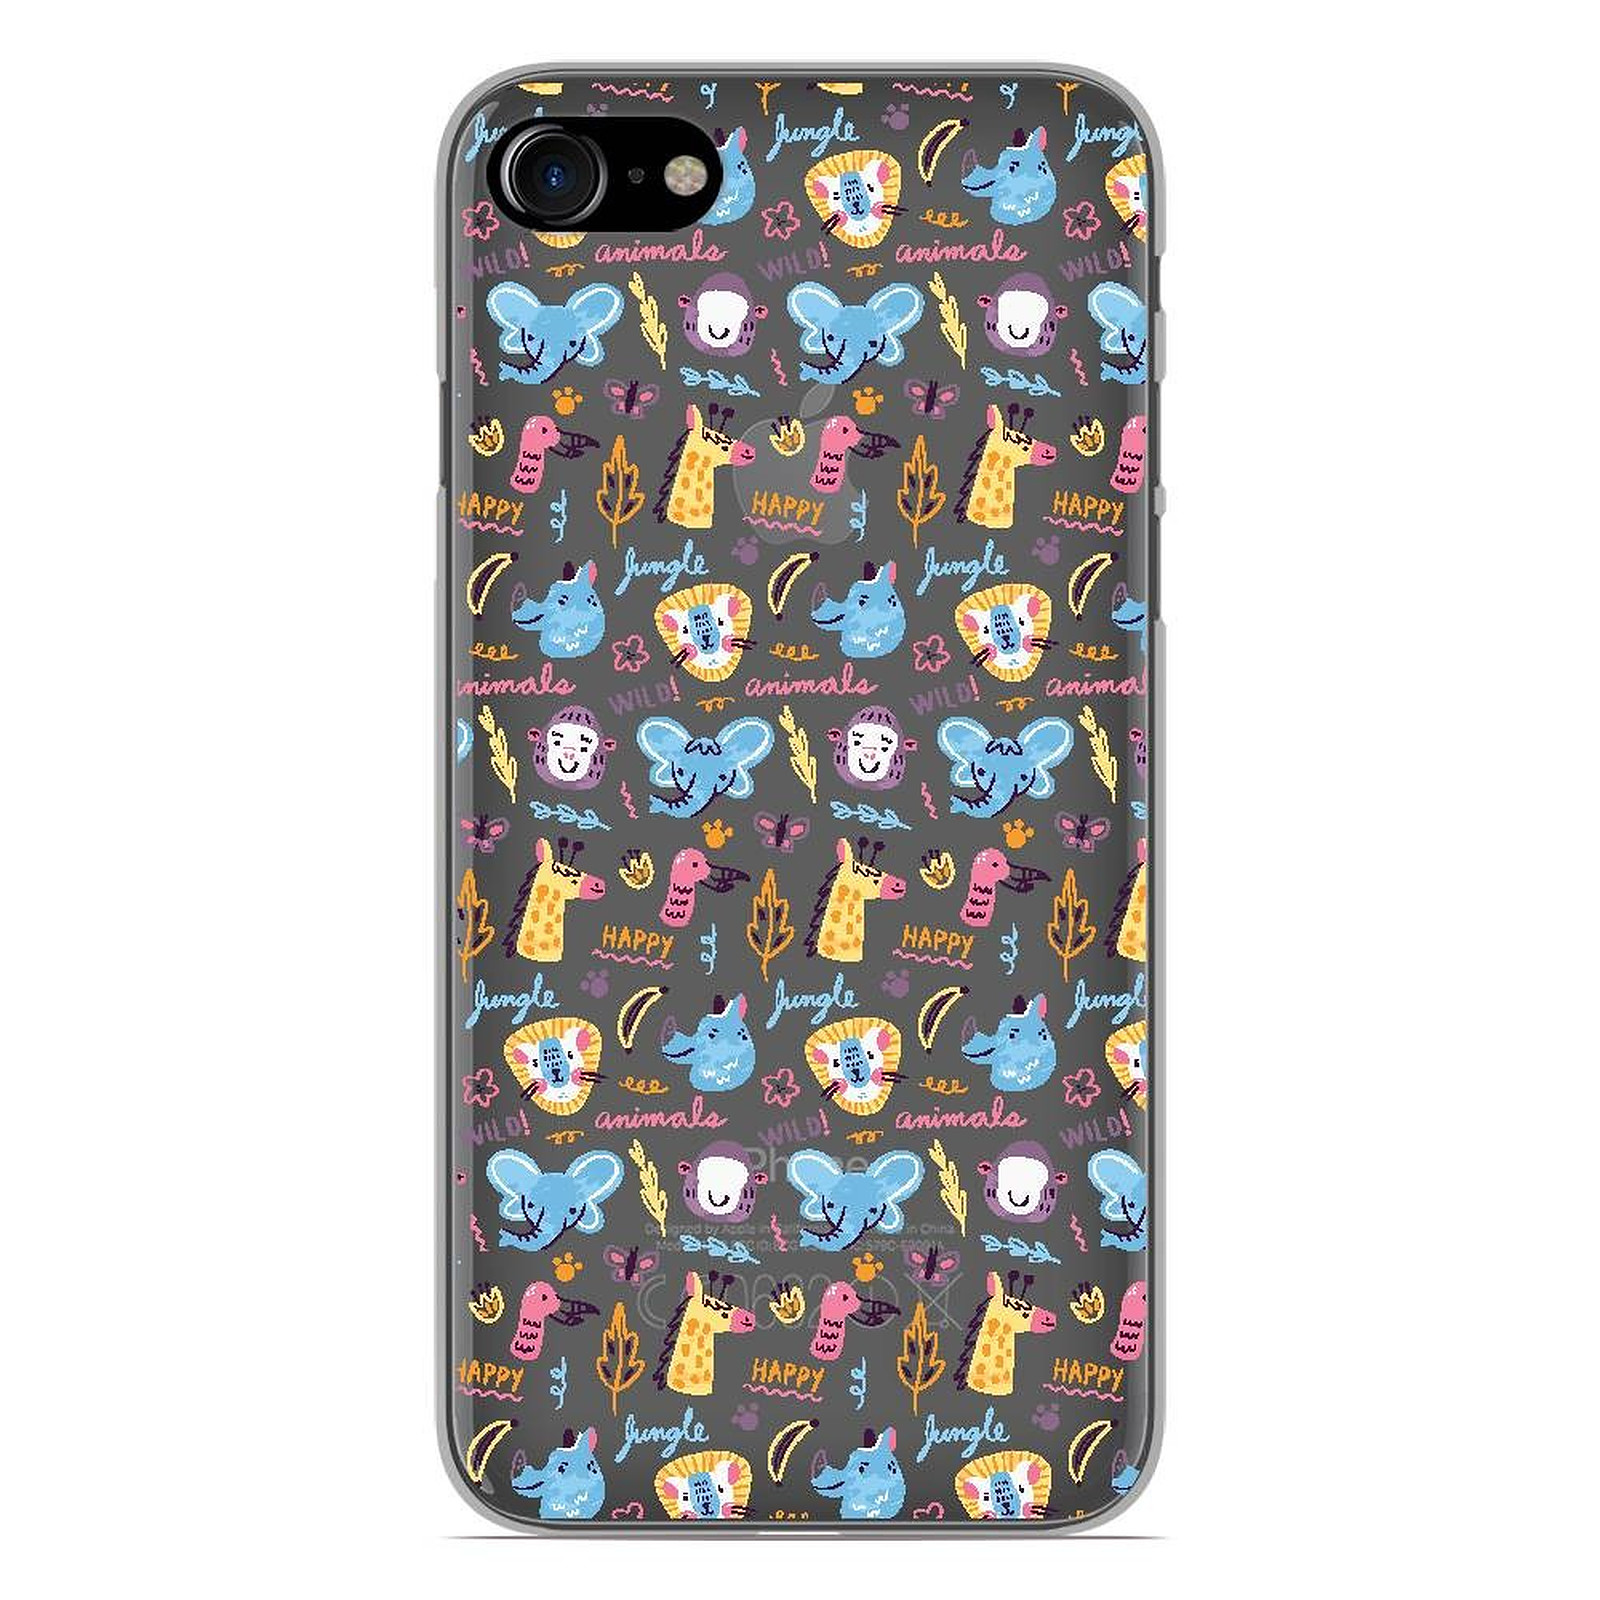 1001 Coques Coque silicone gel Apple iPhone 7 motif Happy animals - Coque telephone 1001Coques